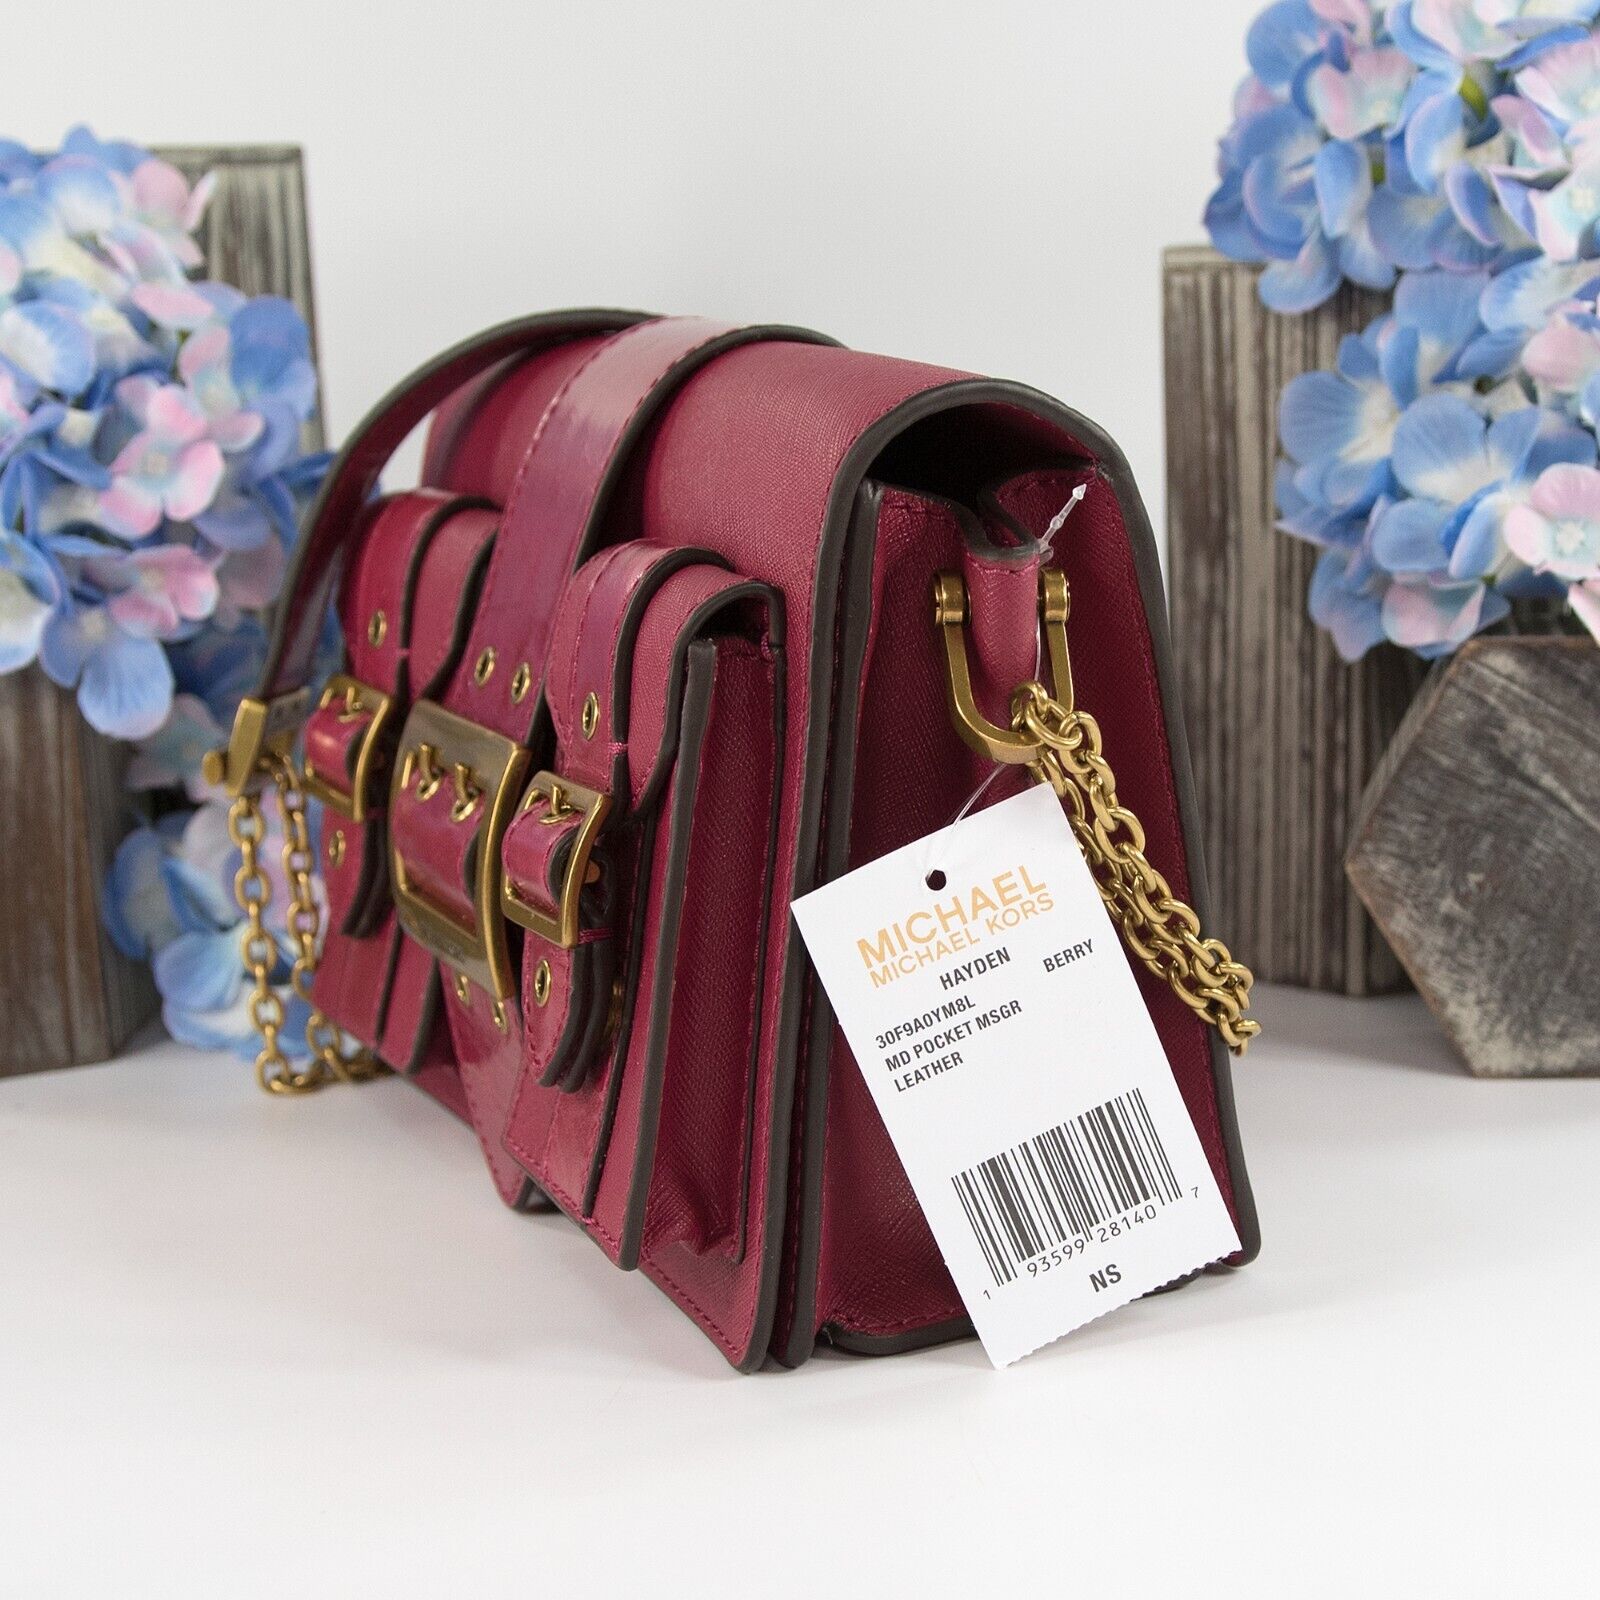 Michael Kors Grapefruit Leather Selma Medium Messenger Crossbody Bag